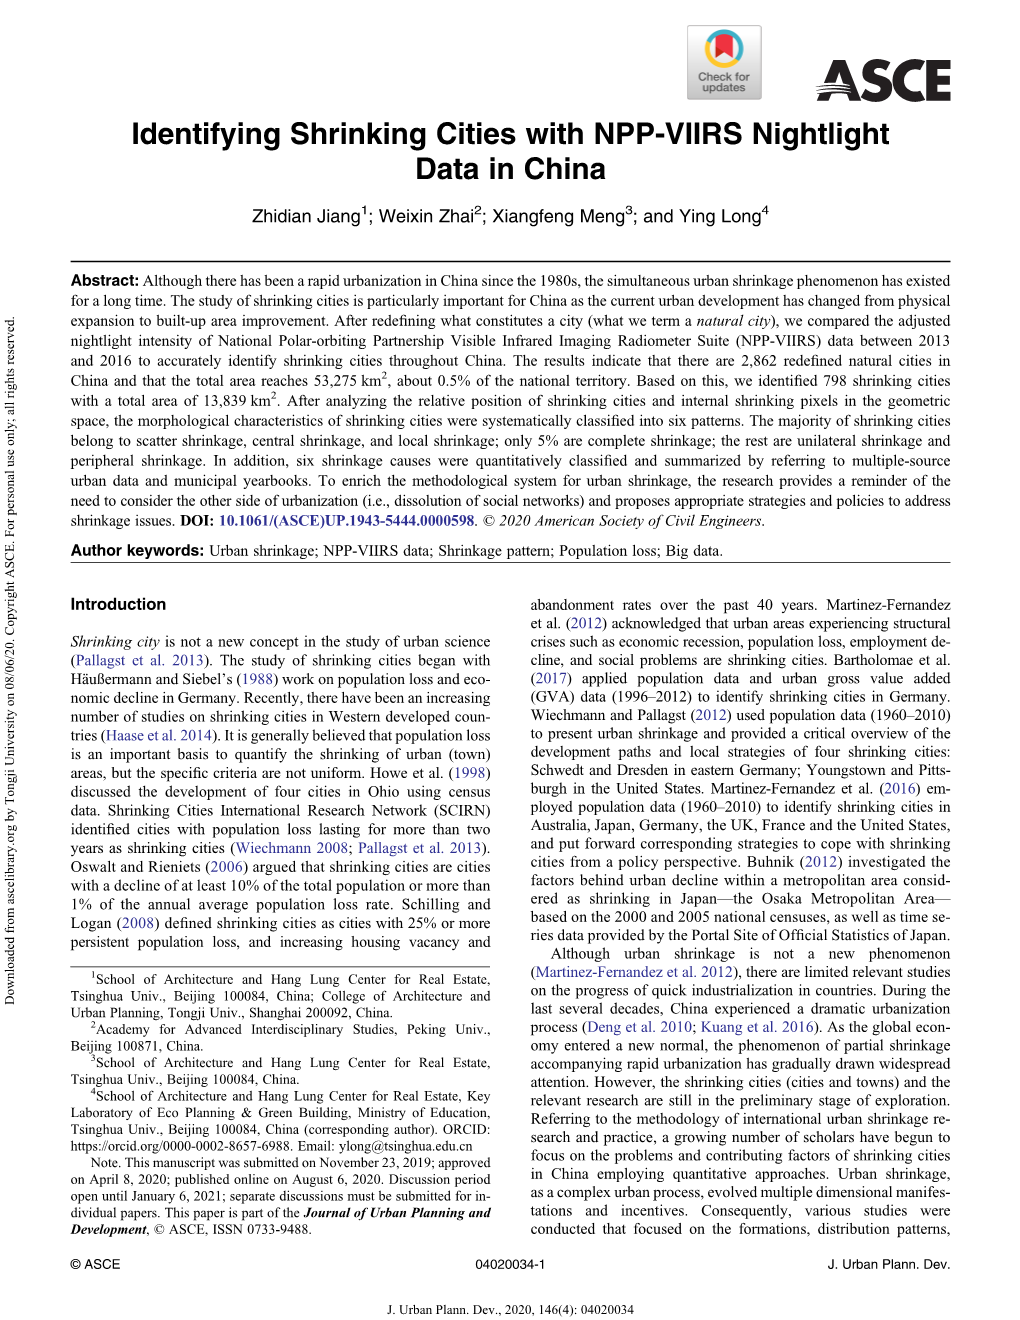 Identifying Shrinking Cities with NPP-VIIRS Nightlight Data in China